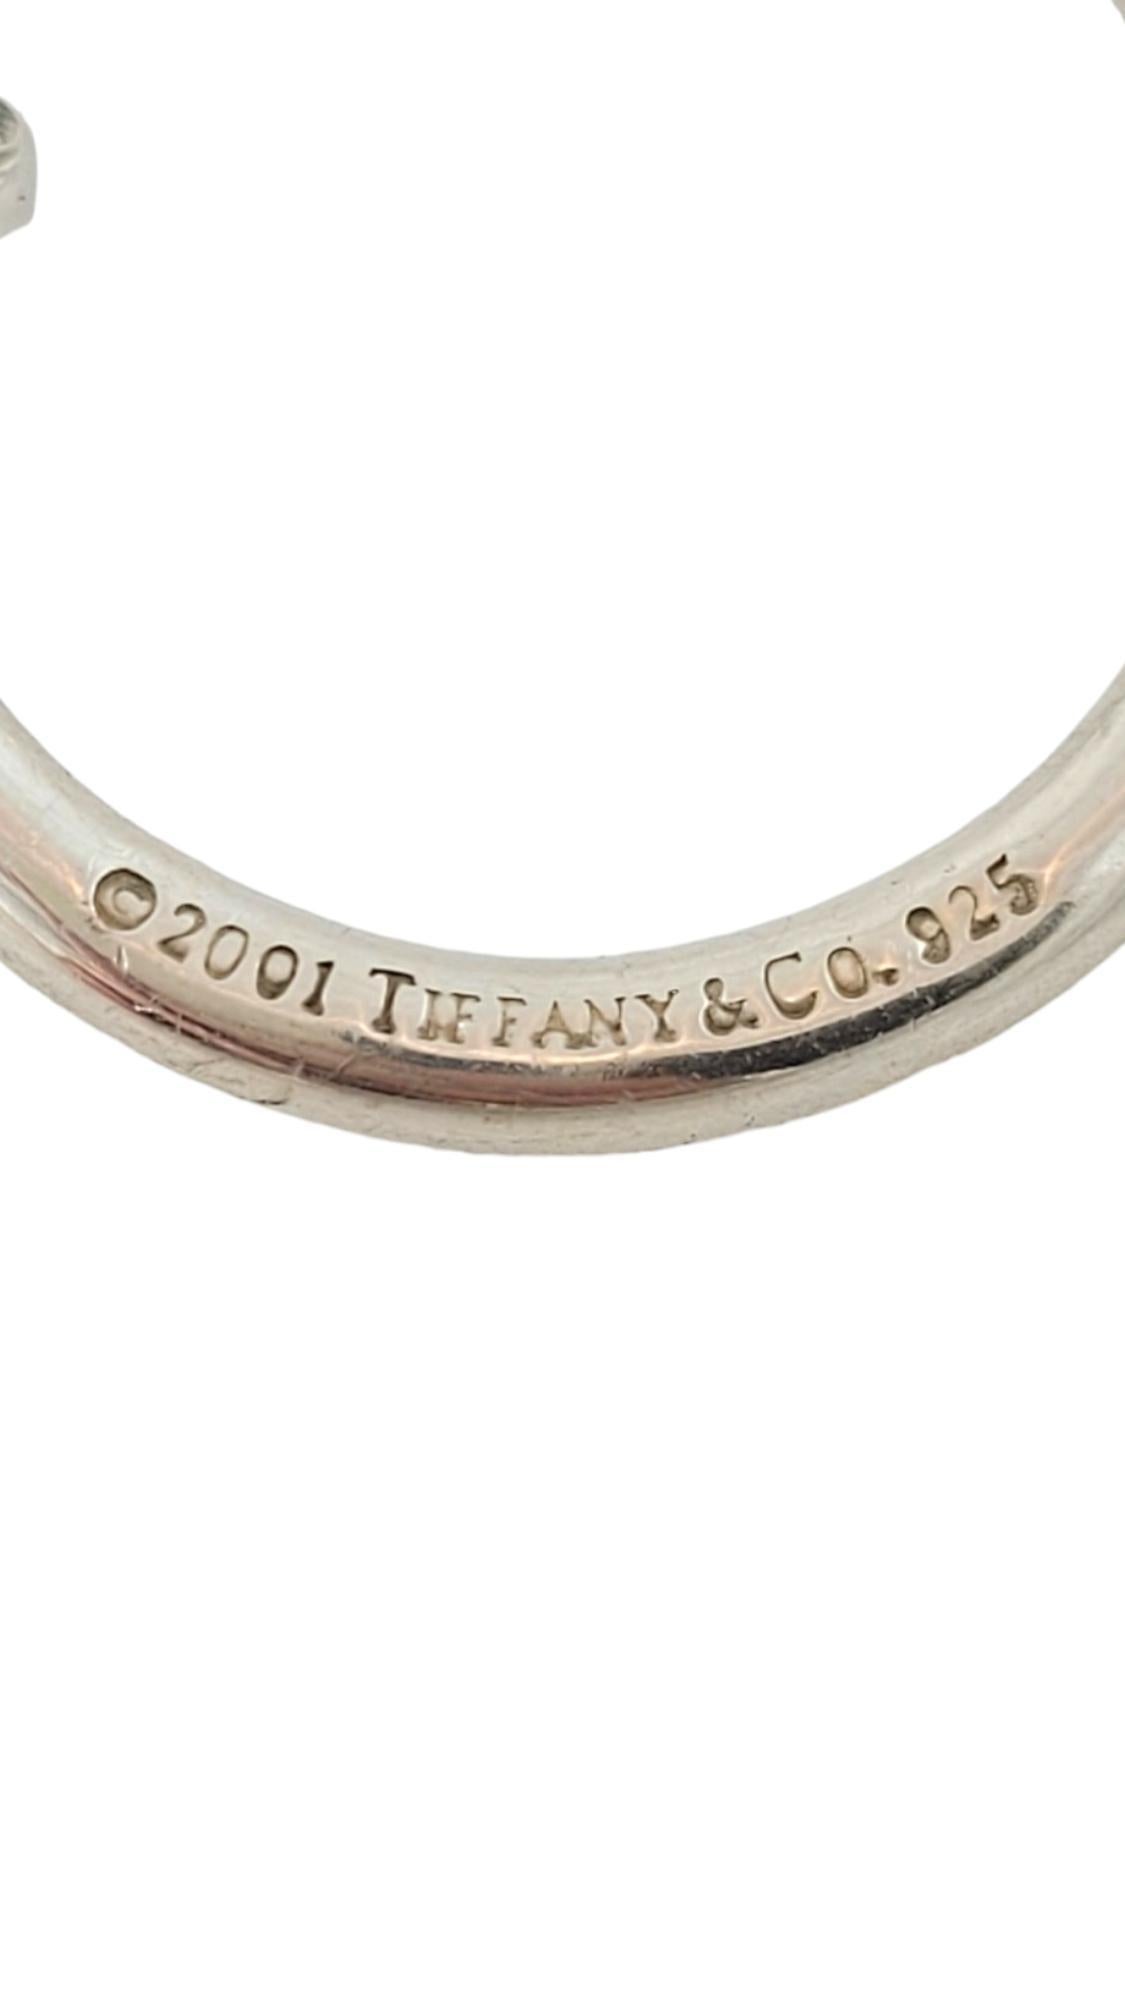 Tiffany & Co Sterling Silver Oval Tag Screwball Key Ring #17412 2